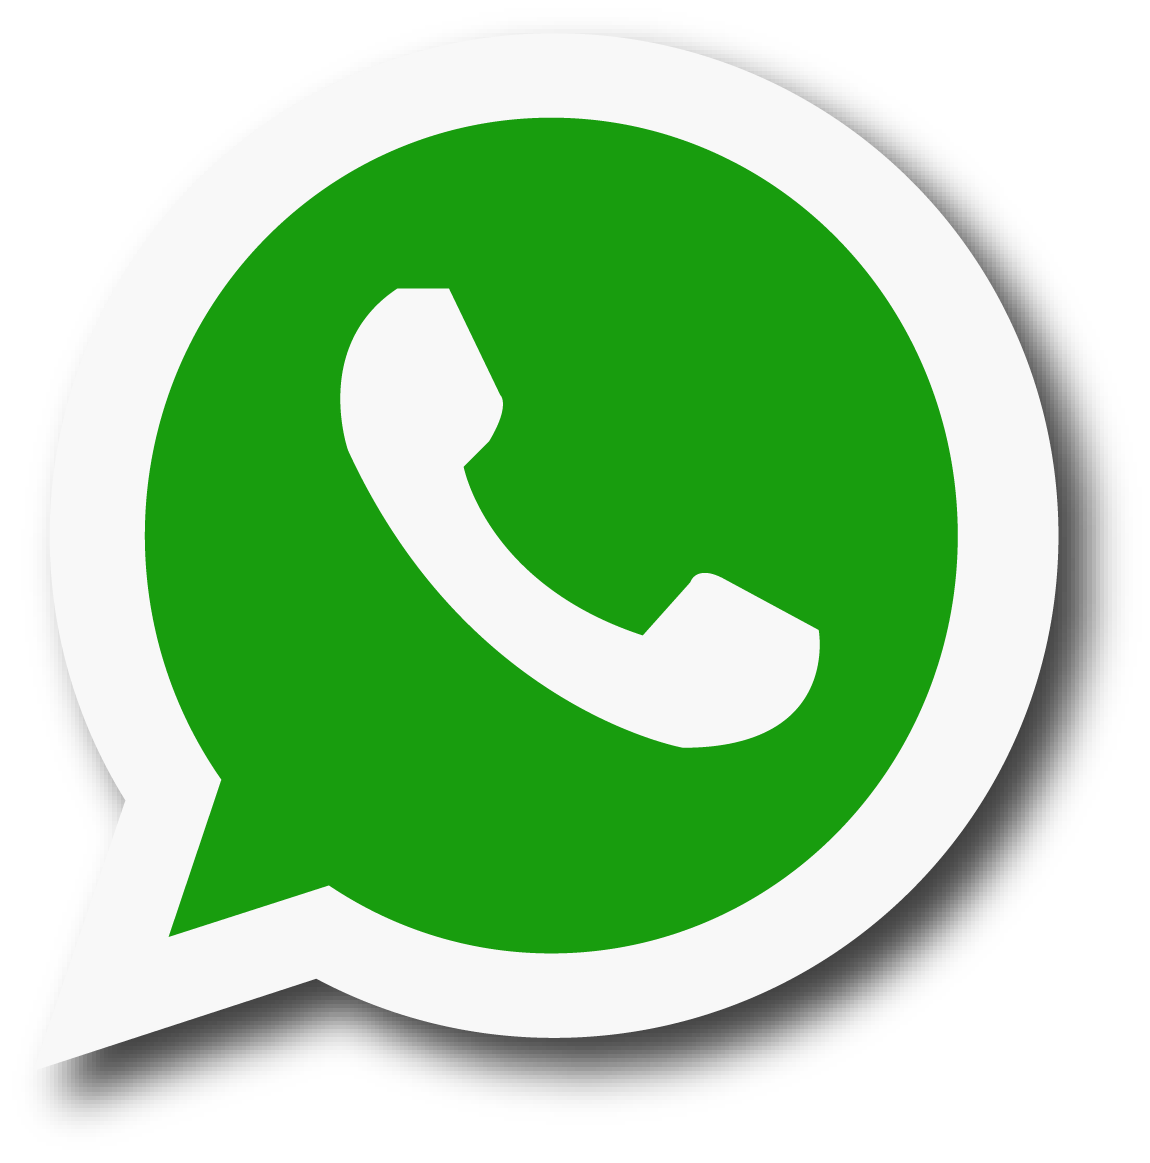 whatsapp destek hattı